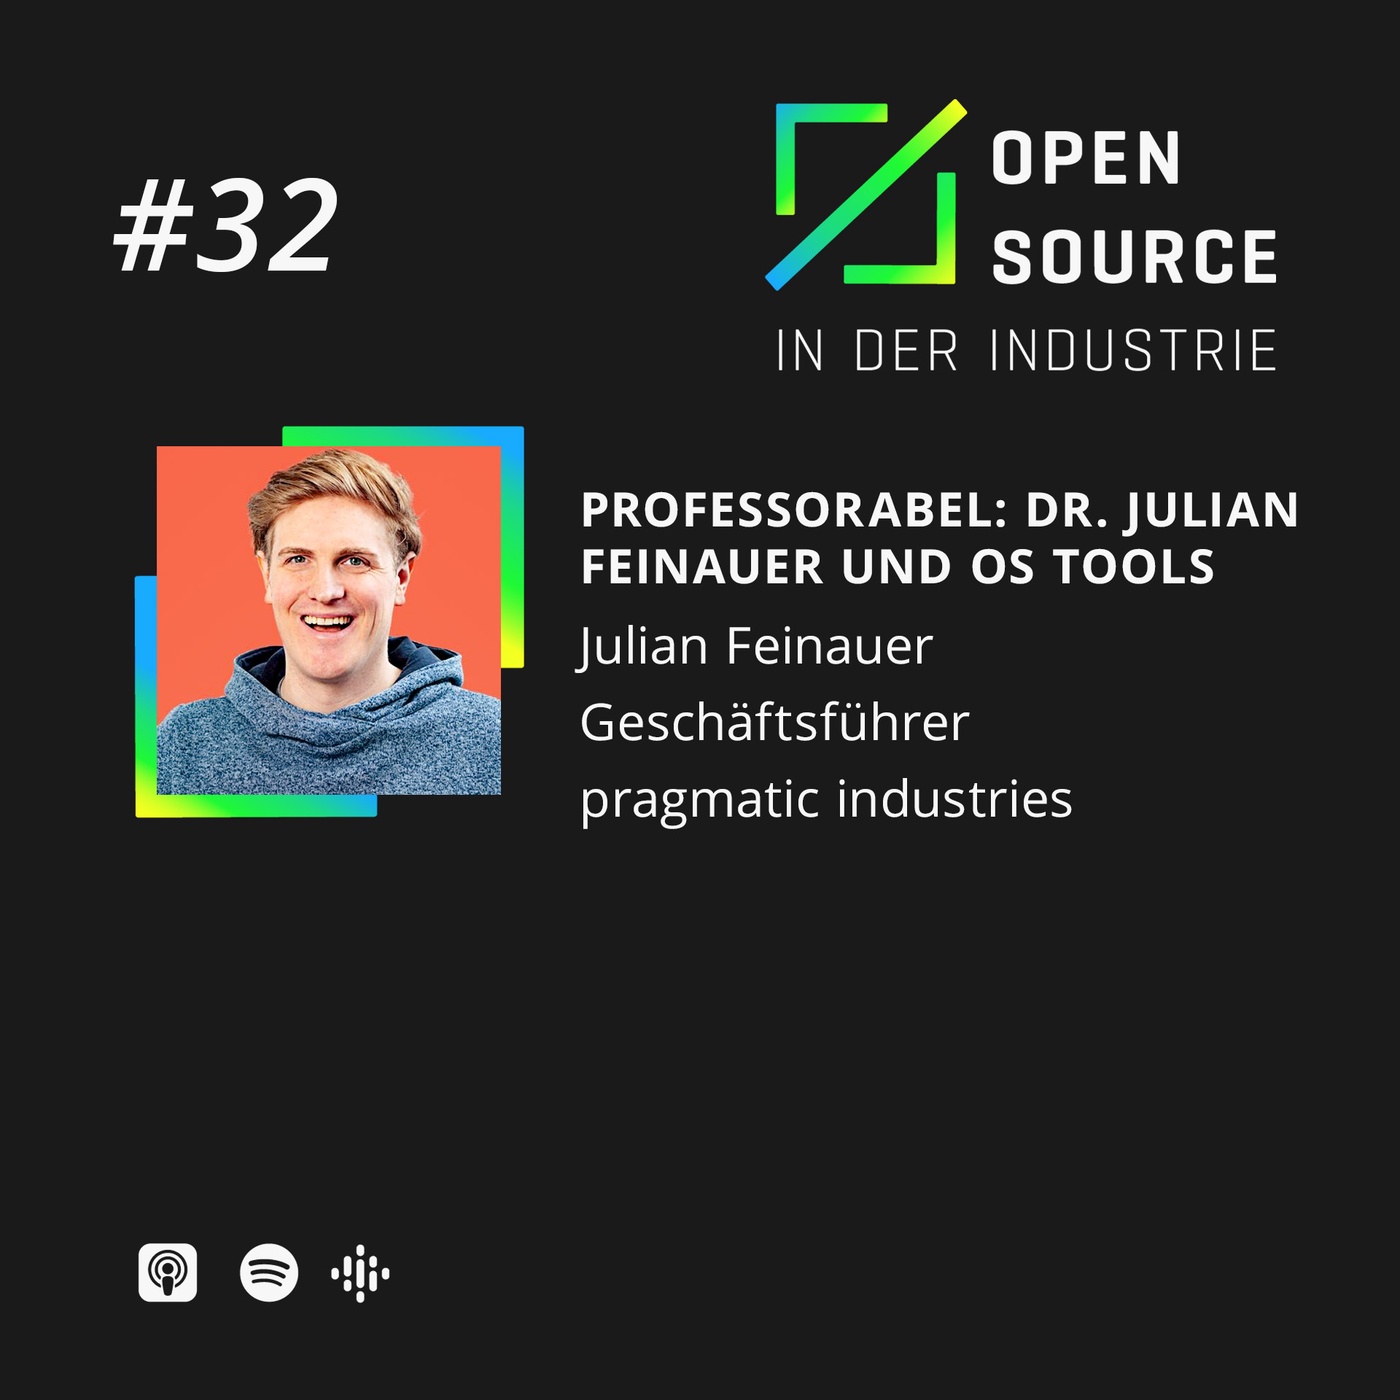 Professorabel: Dr. Julian Feinauer und OS Tools